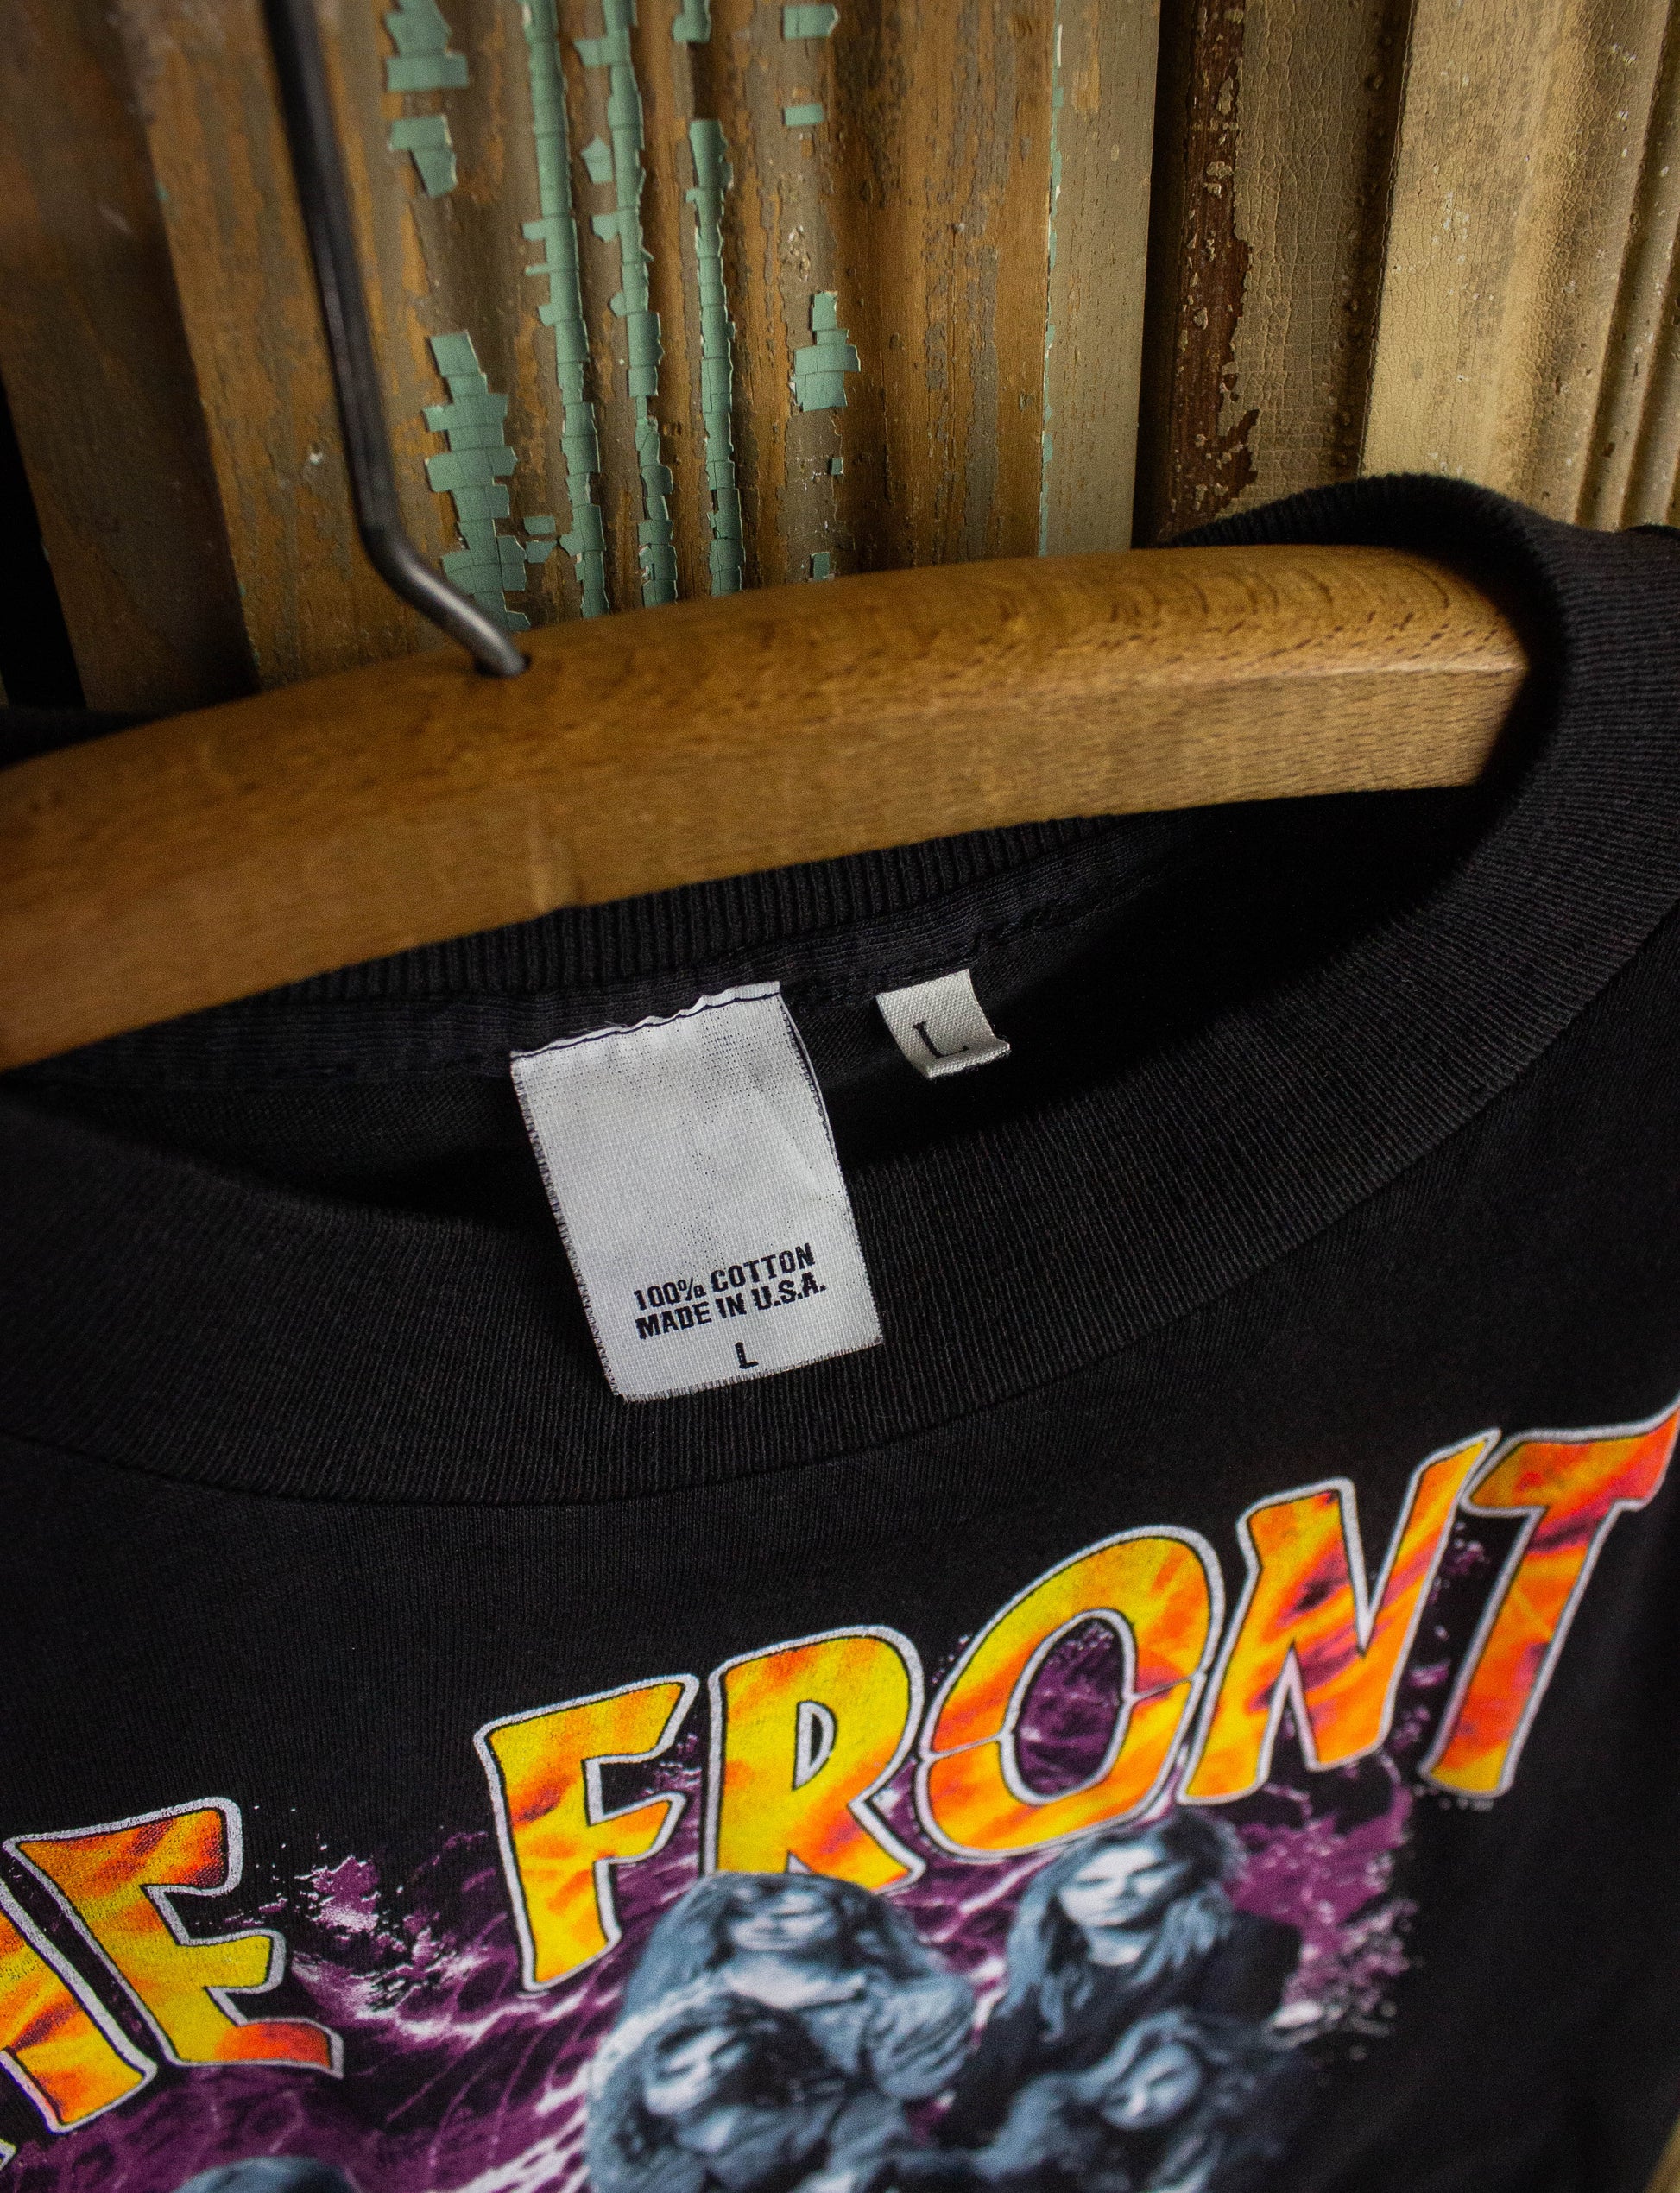 Vintage The Front Fire Concert T Shirt 1989 Black Large